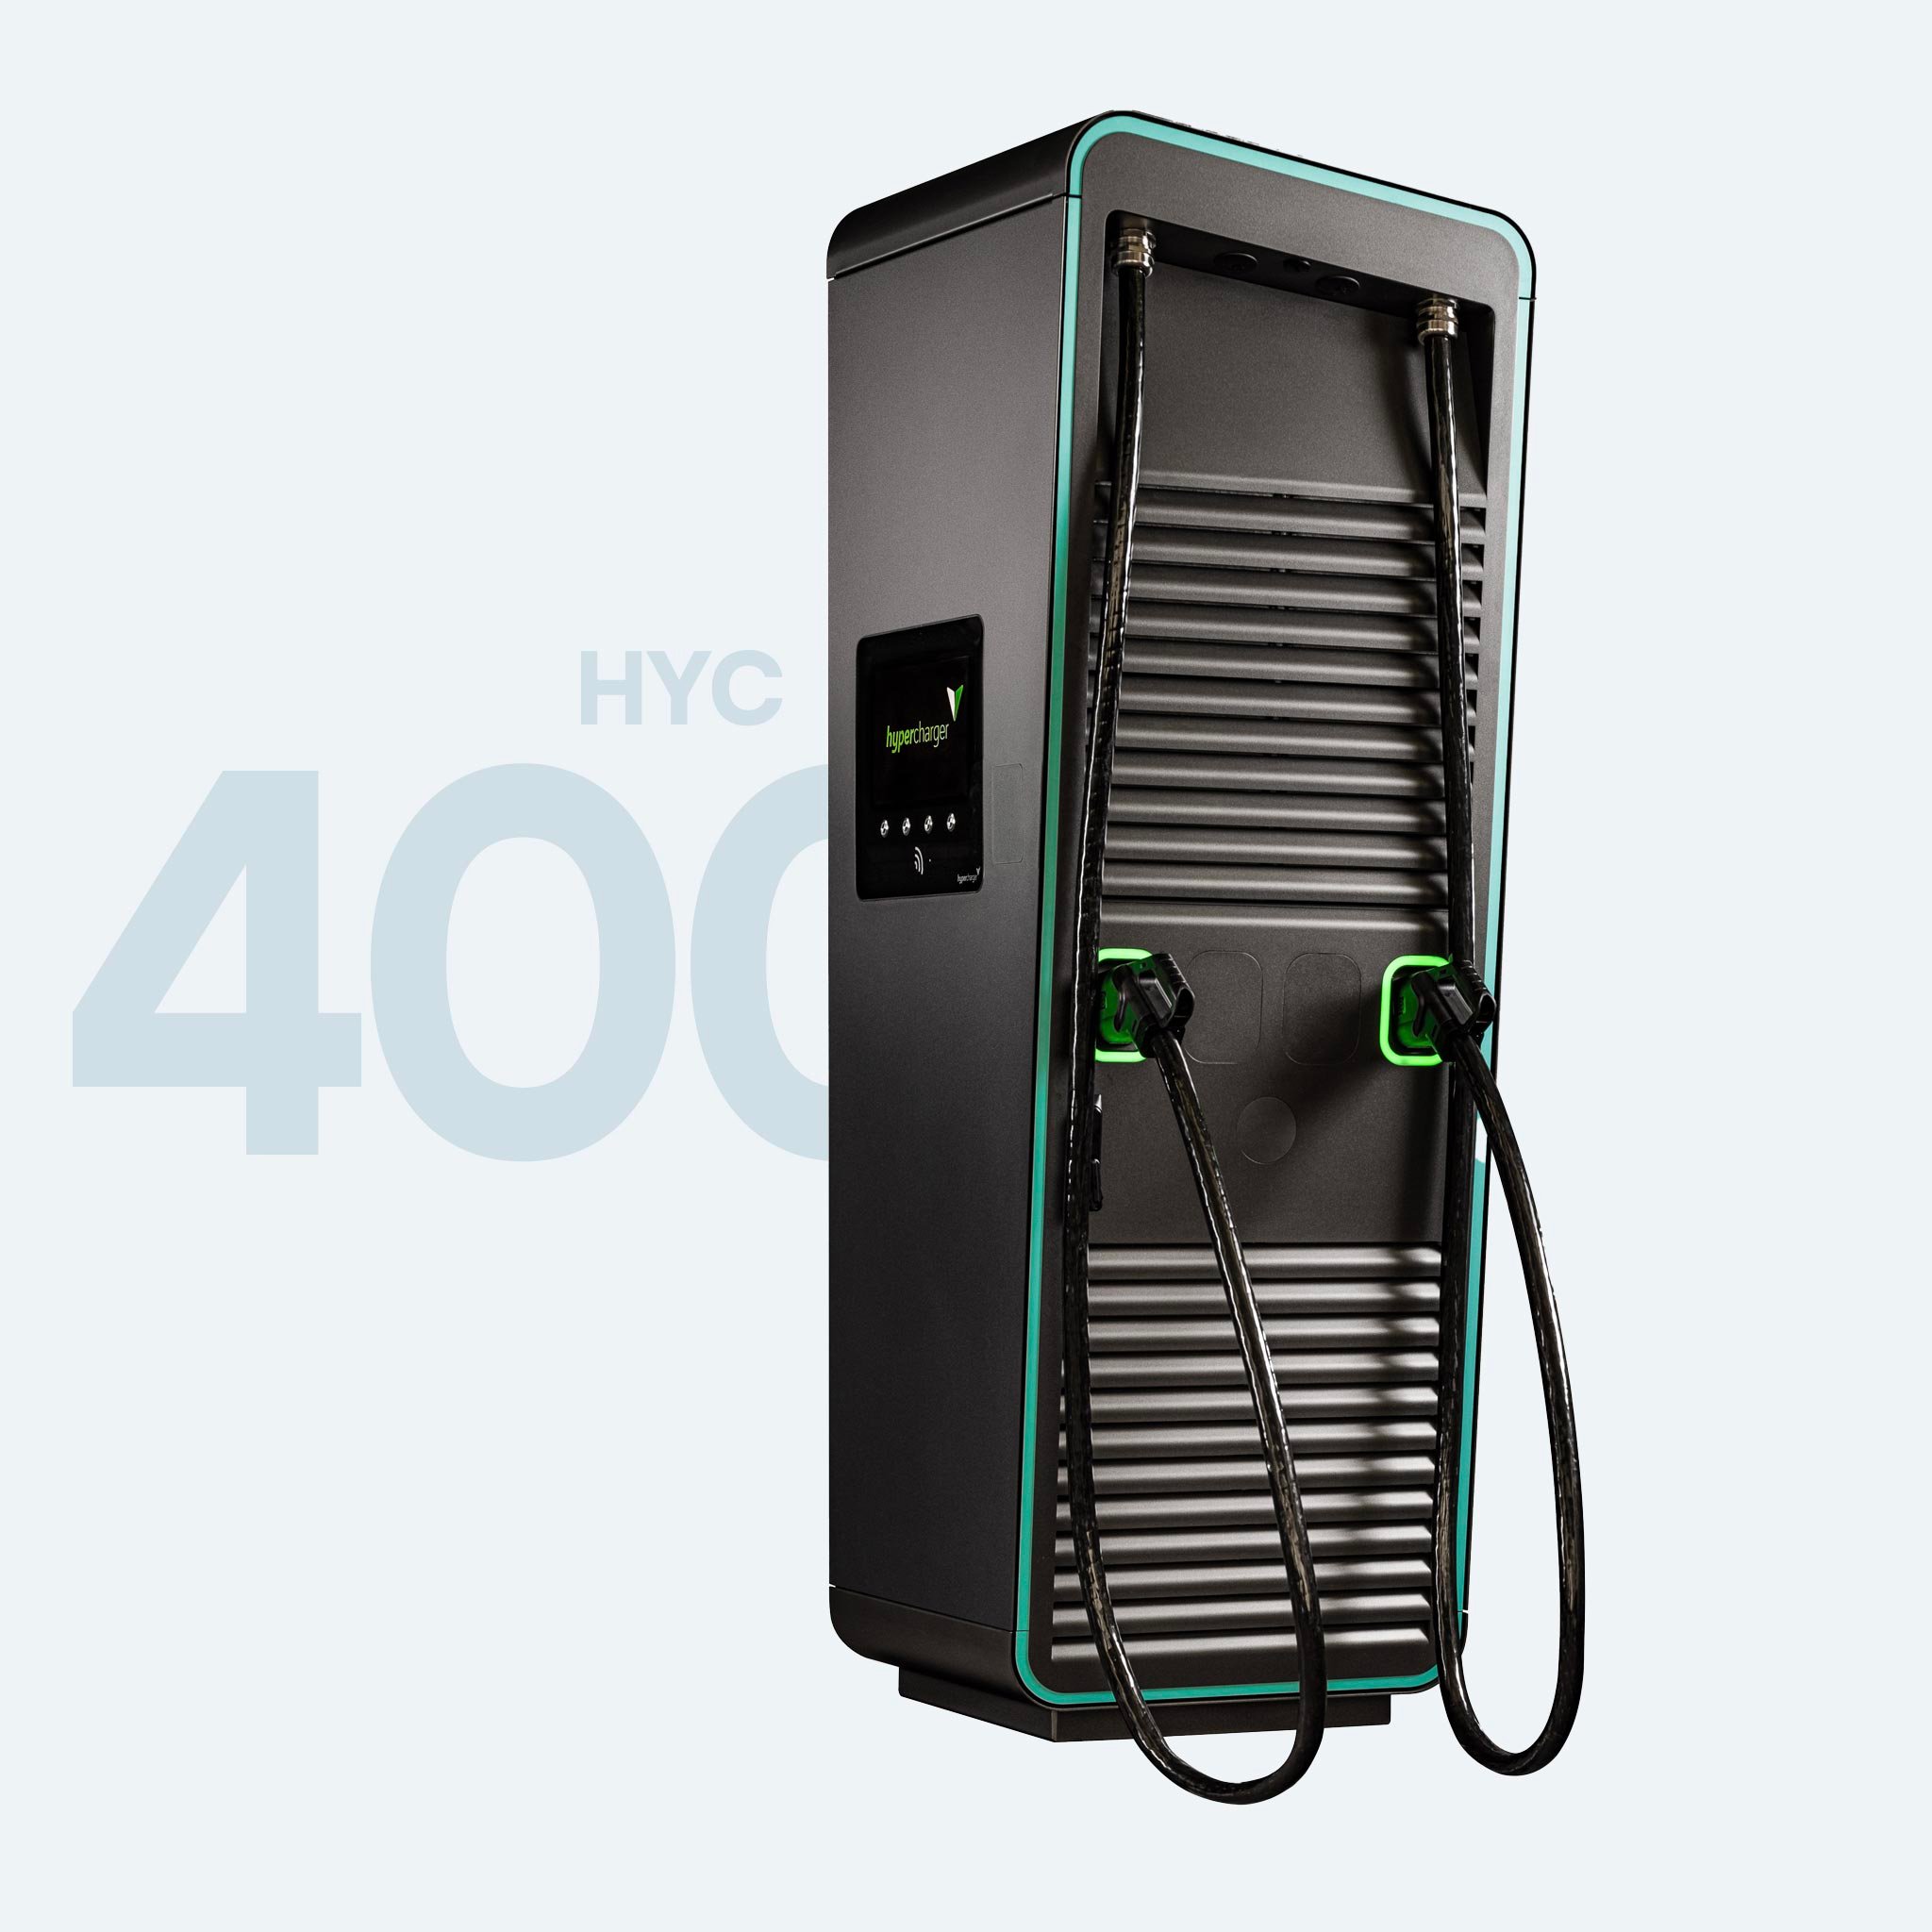 alpitronic hypercharger HYC400 Schnellladestation - Individuell konfigurierbar